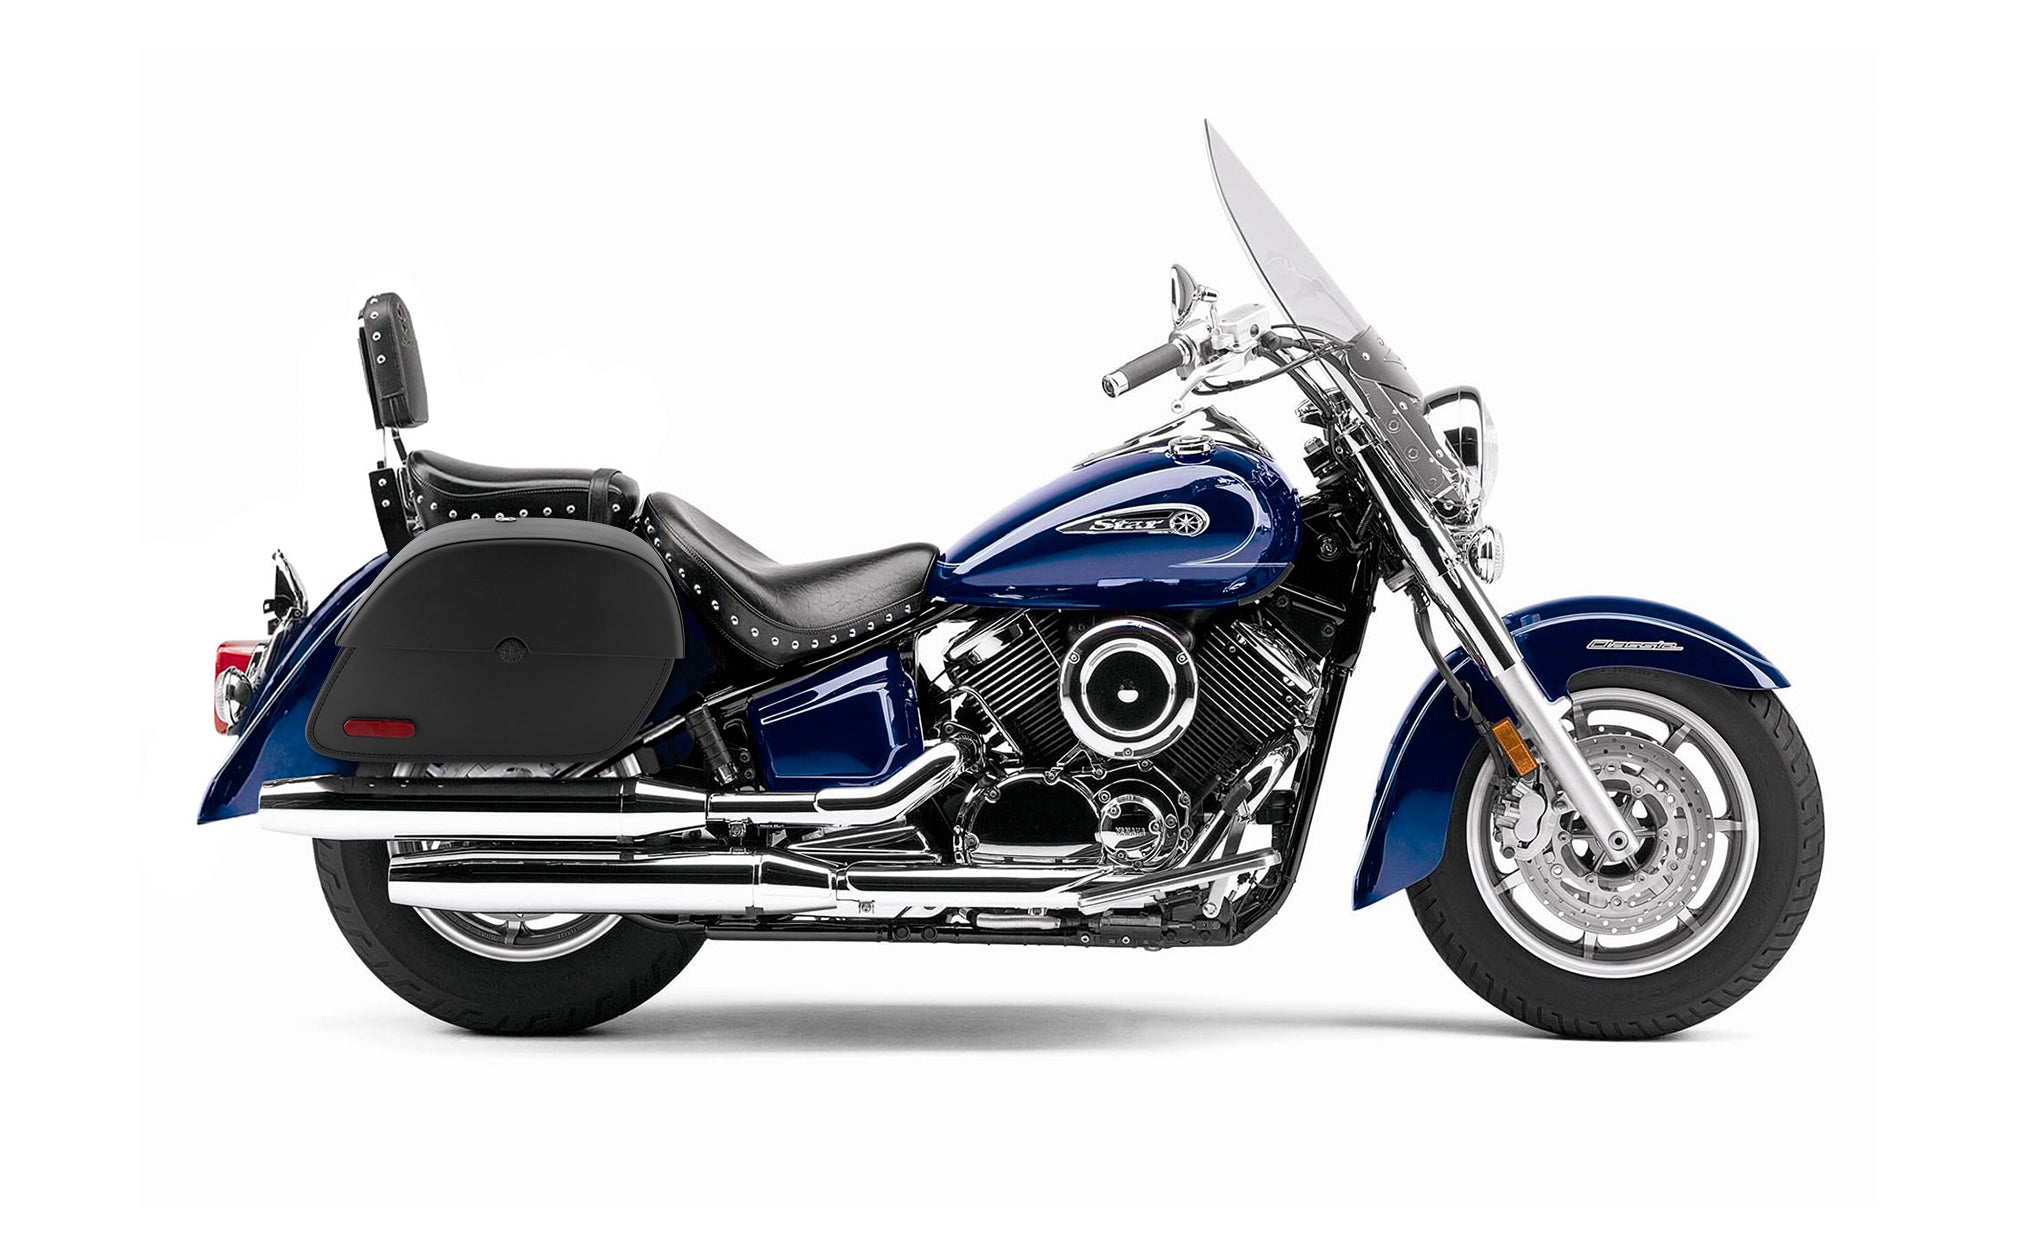 Viking Panzer Medium Yamaha Silverado Leather Motorcycle Saddlebags Engineering Excellence with Bag on Bike @expand